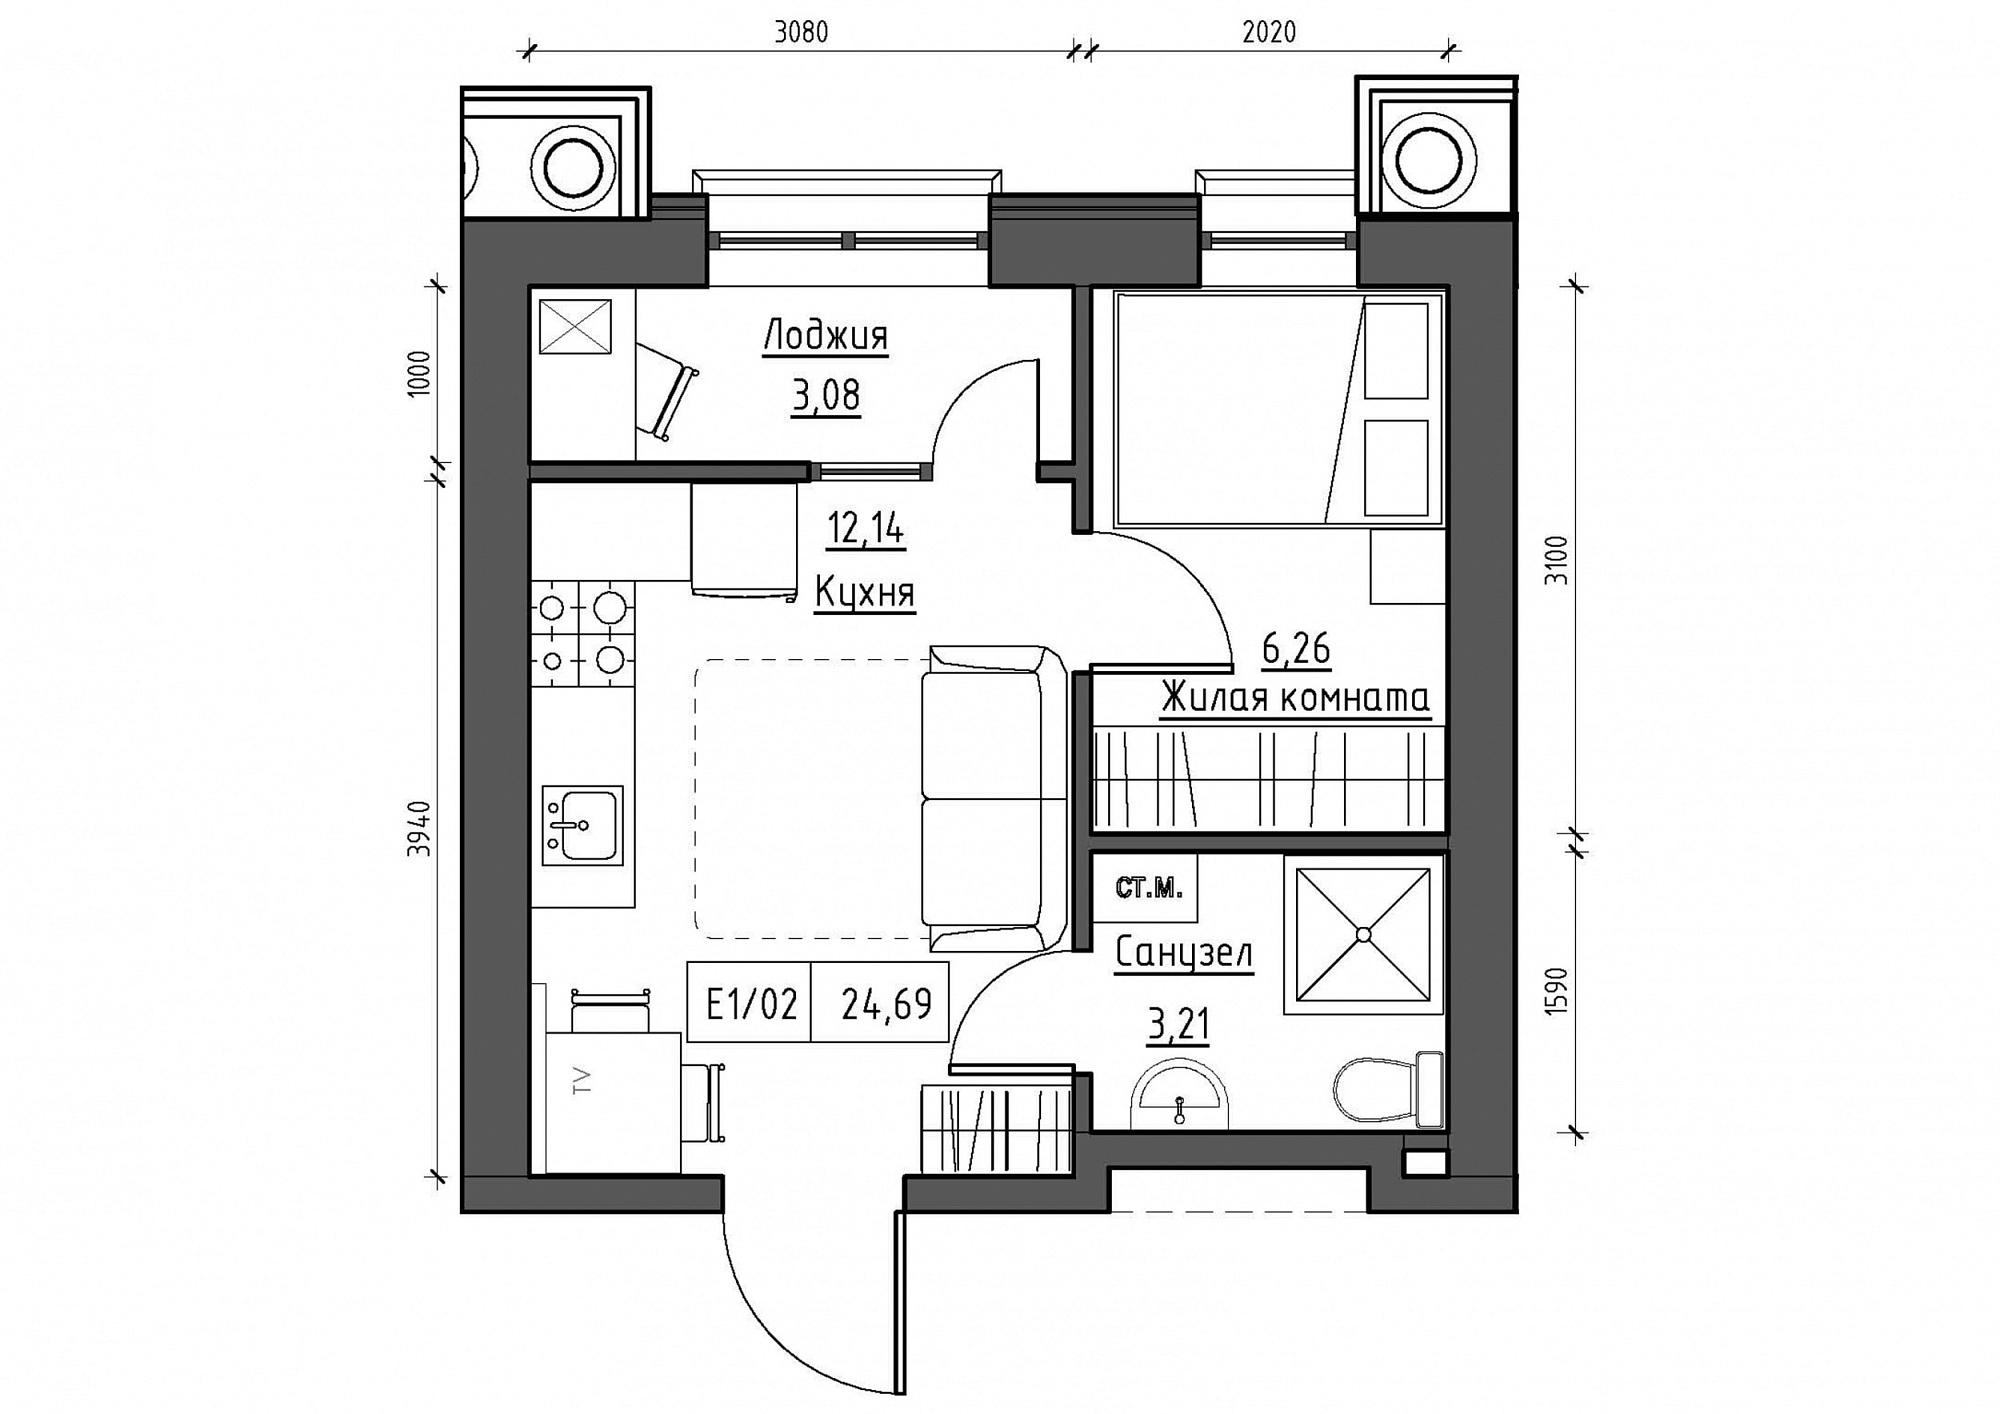 Planning 1-rm flats area 25.11m2, KS-012-05/0002.